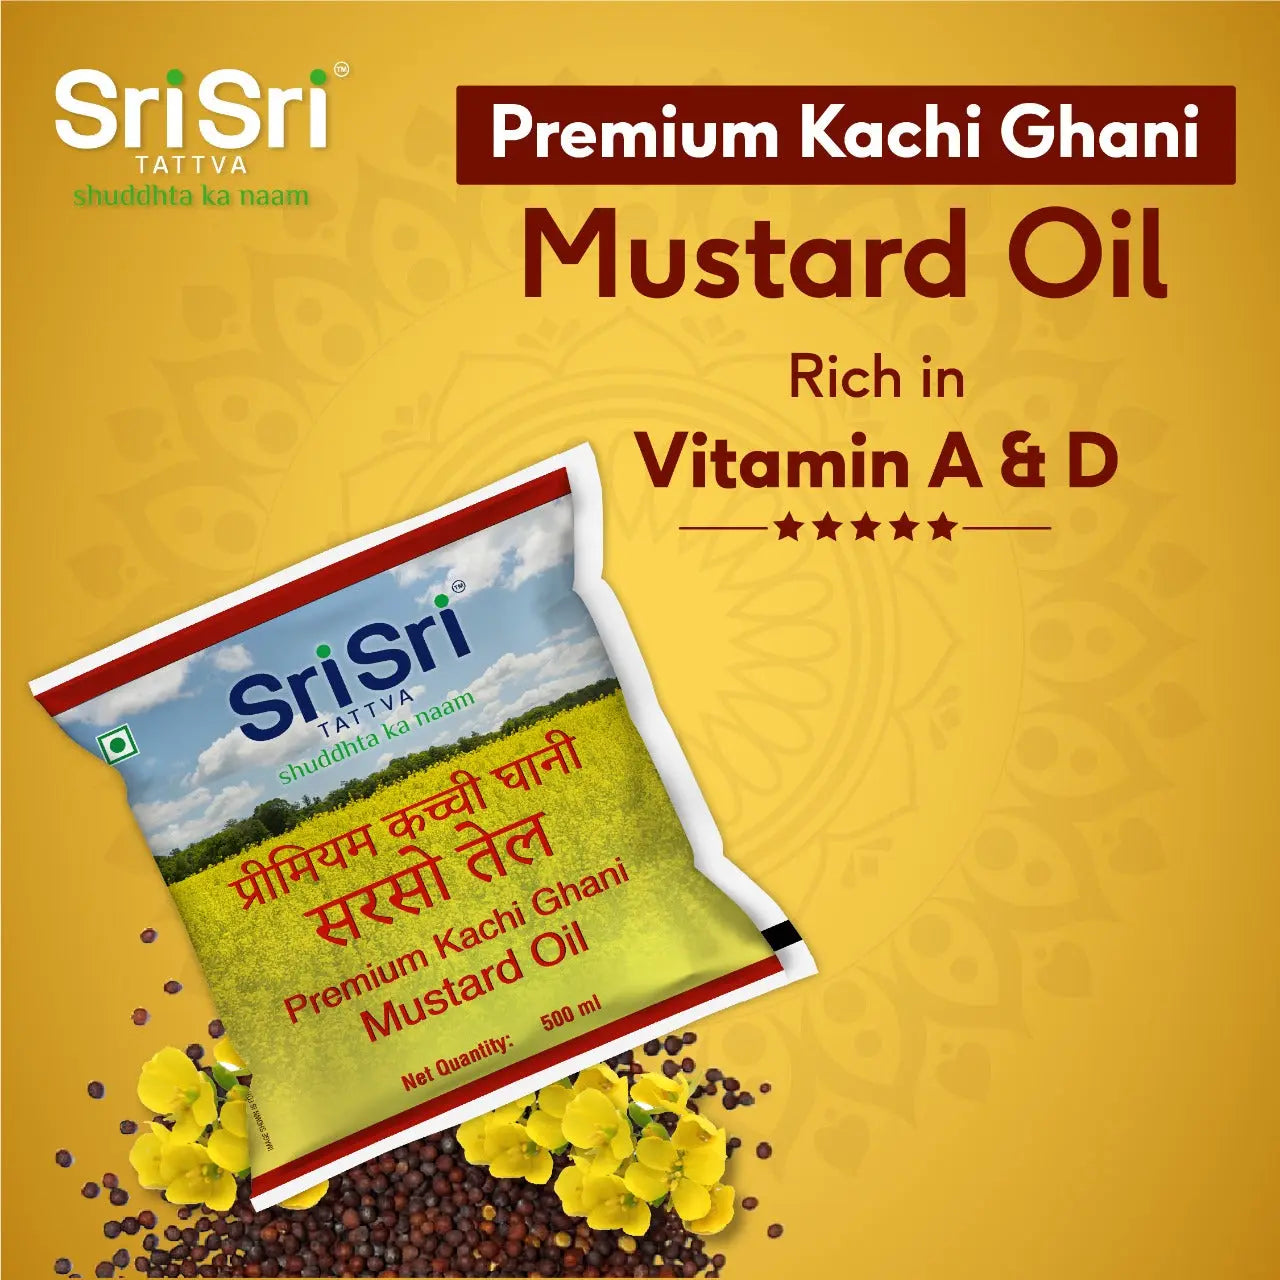 Premium Kachi Ghani Mustard Oil Pouch, 500 ml